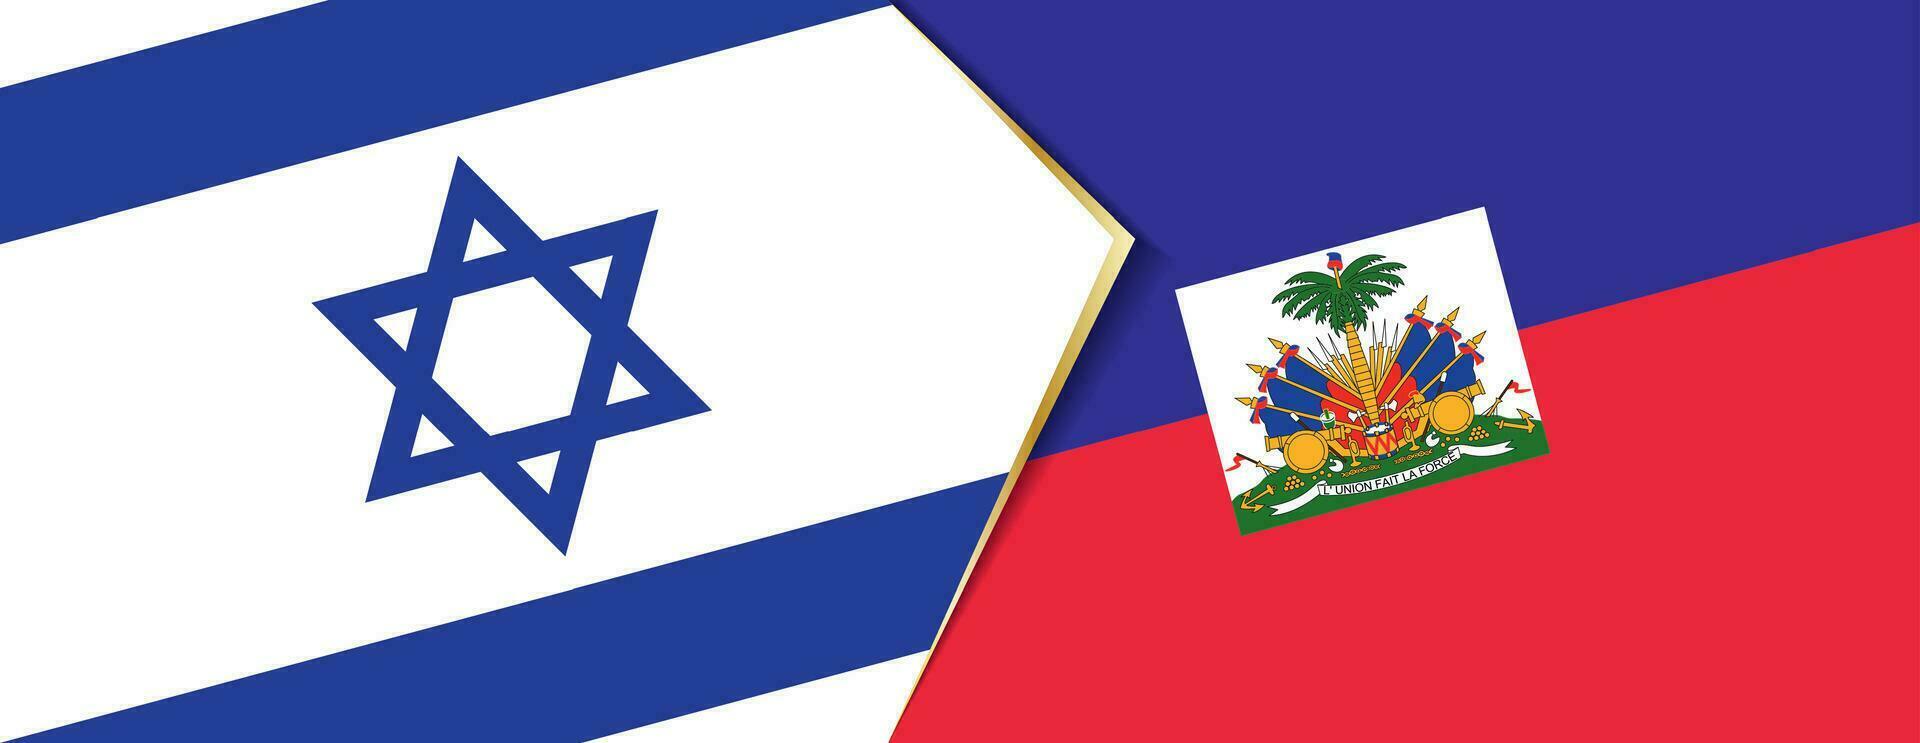 Israel e Haiti bandeiras, dois vetor bandeiras.